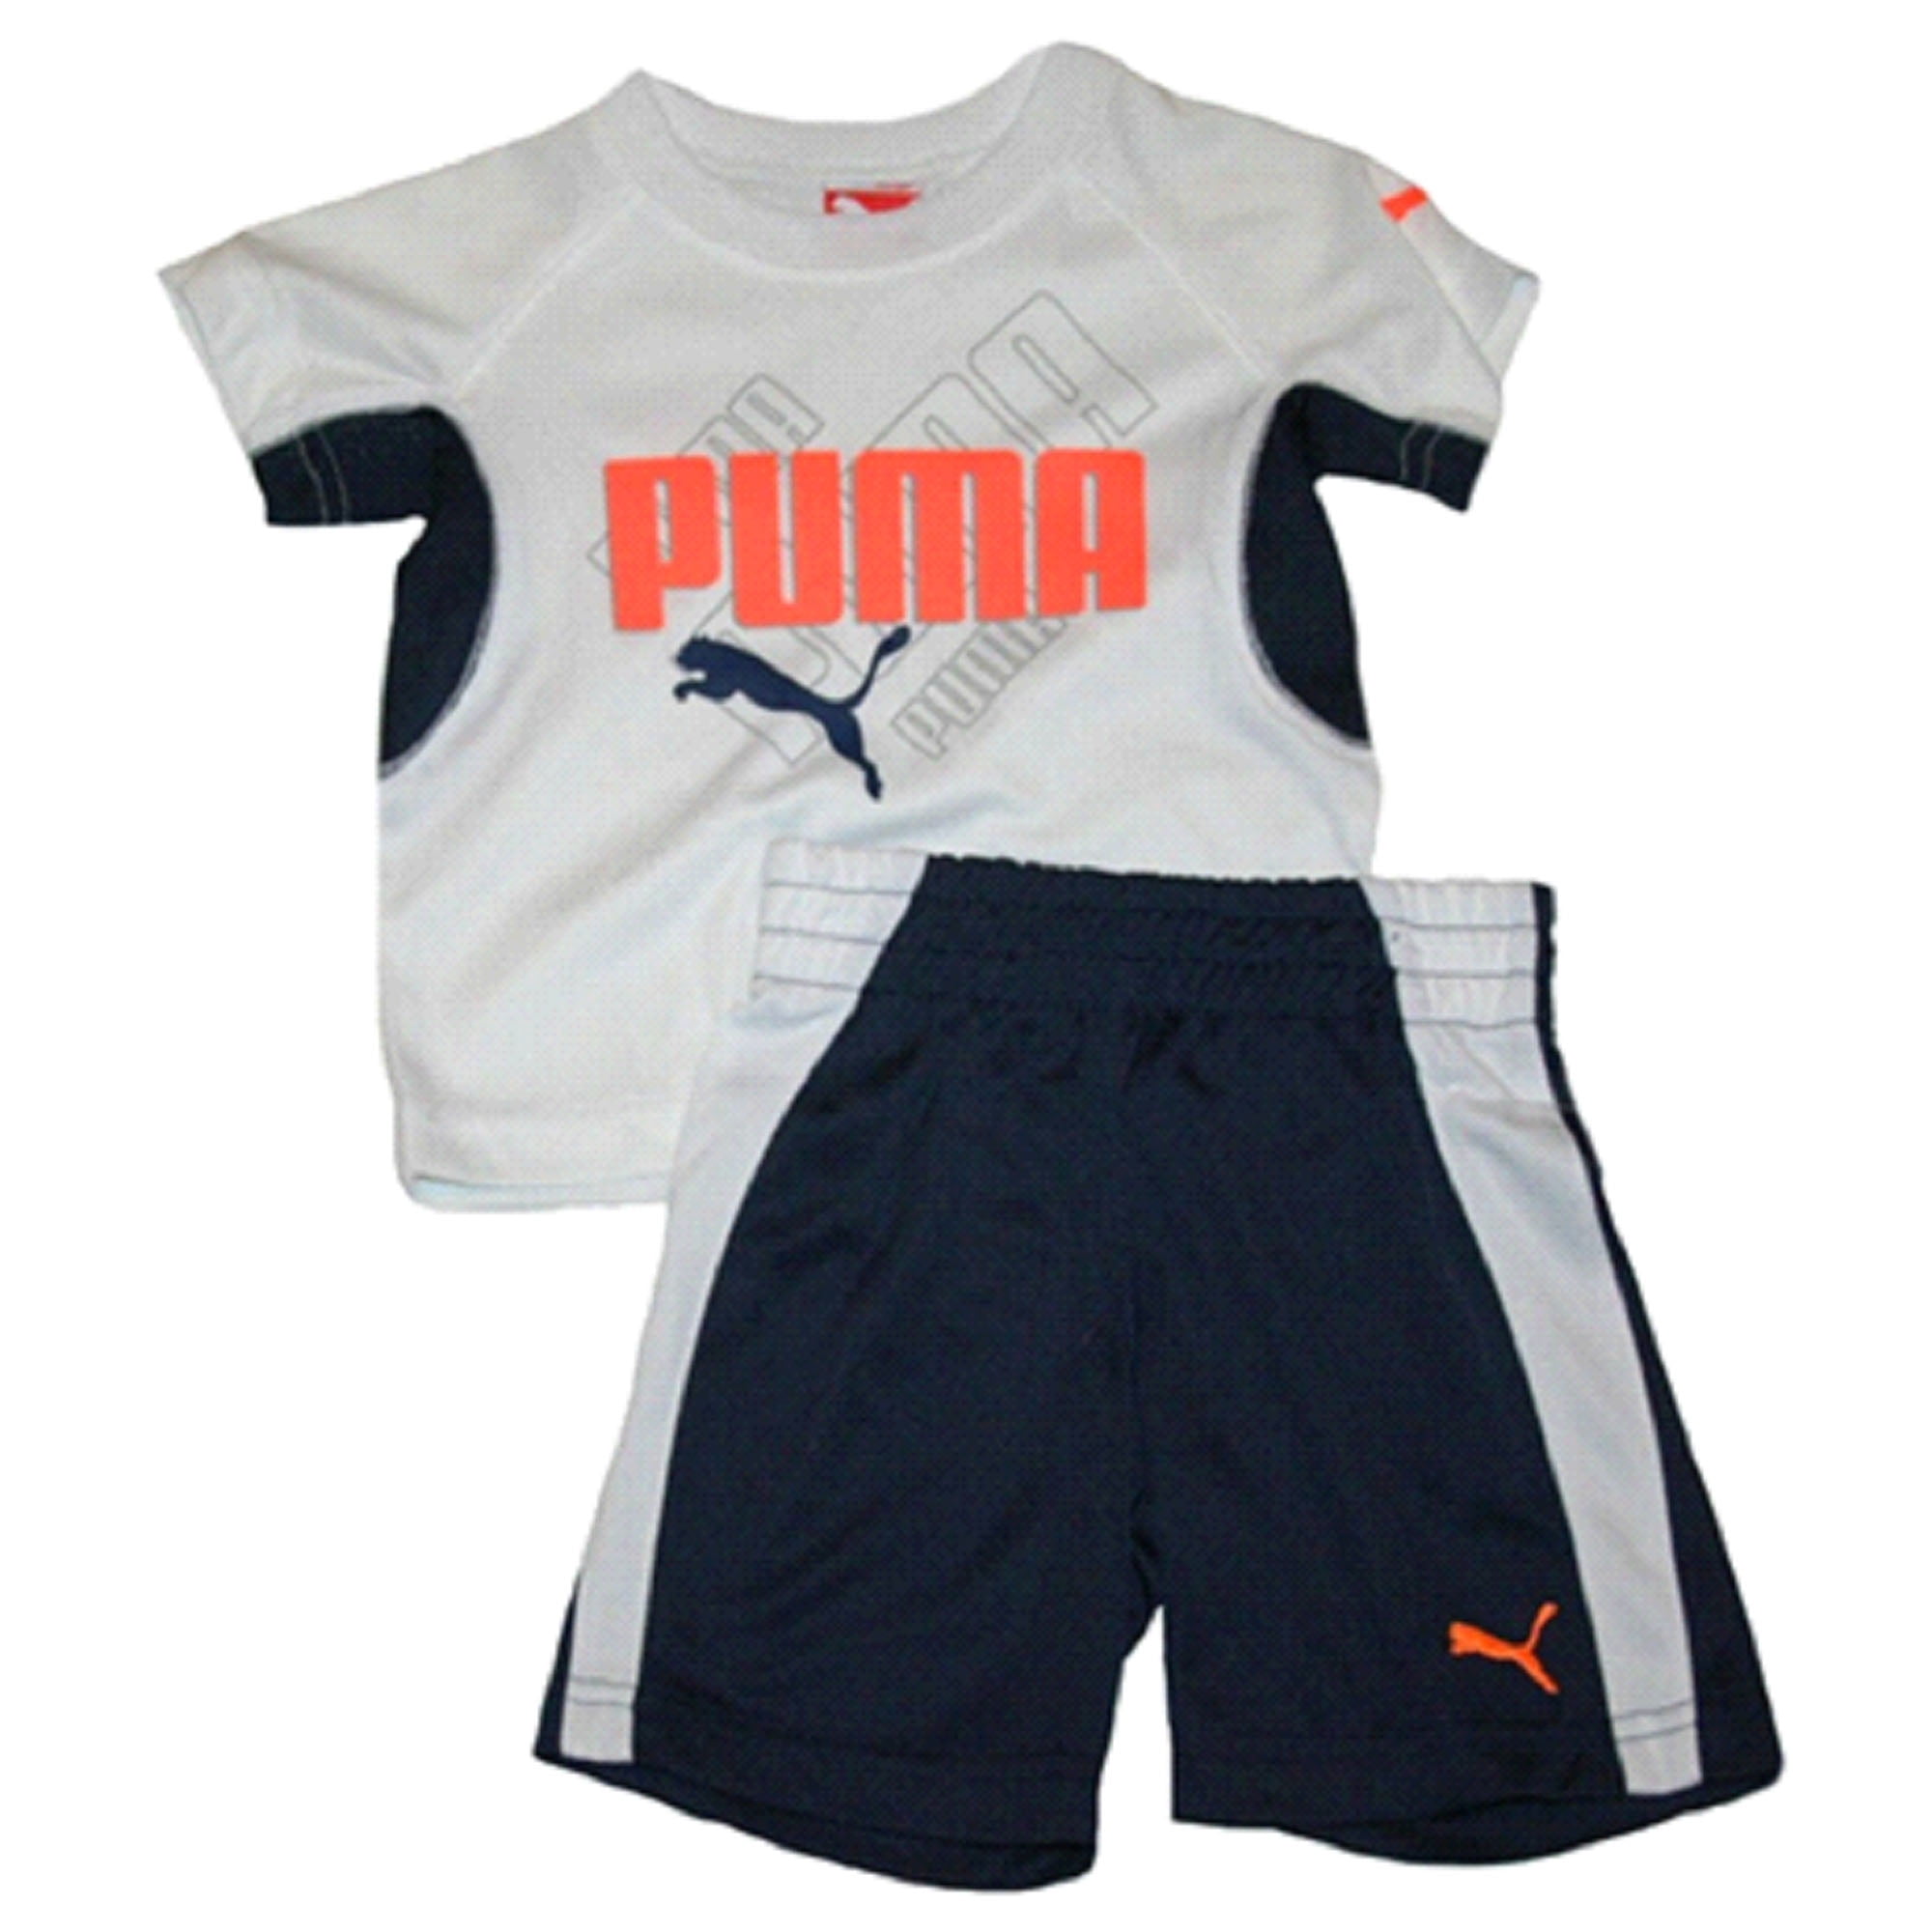 buy nike buy puma clothing size xssports fashion - Piece Set Infant  Alexander Wang - Script Sportswear Graphic T - Shirt and Shorts Two -  Biname-fmedShops CV